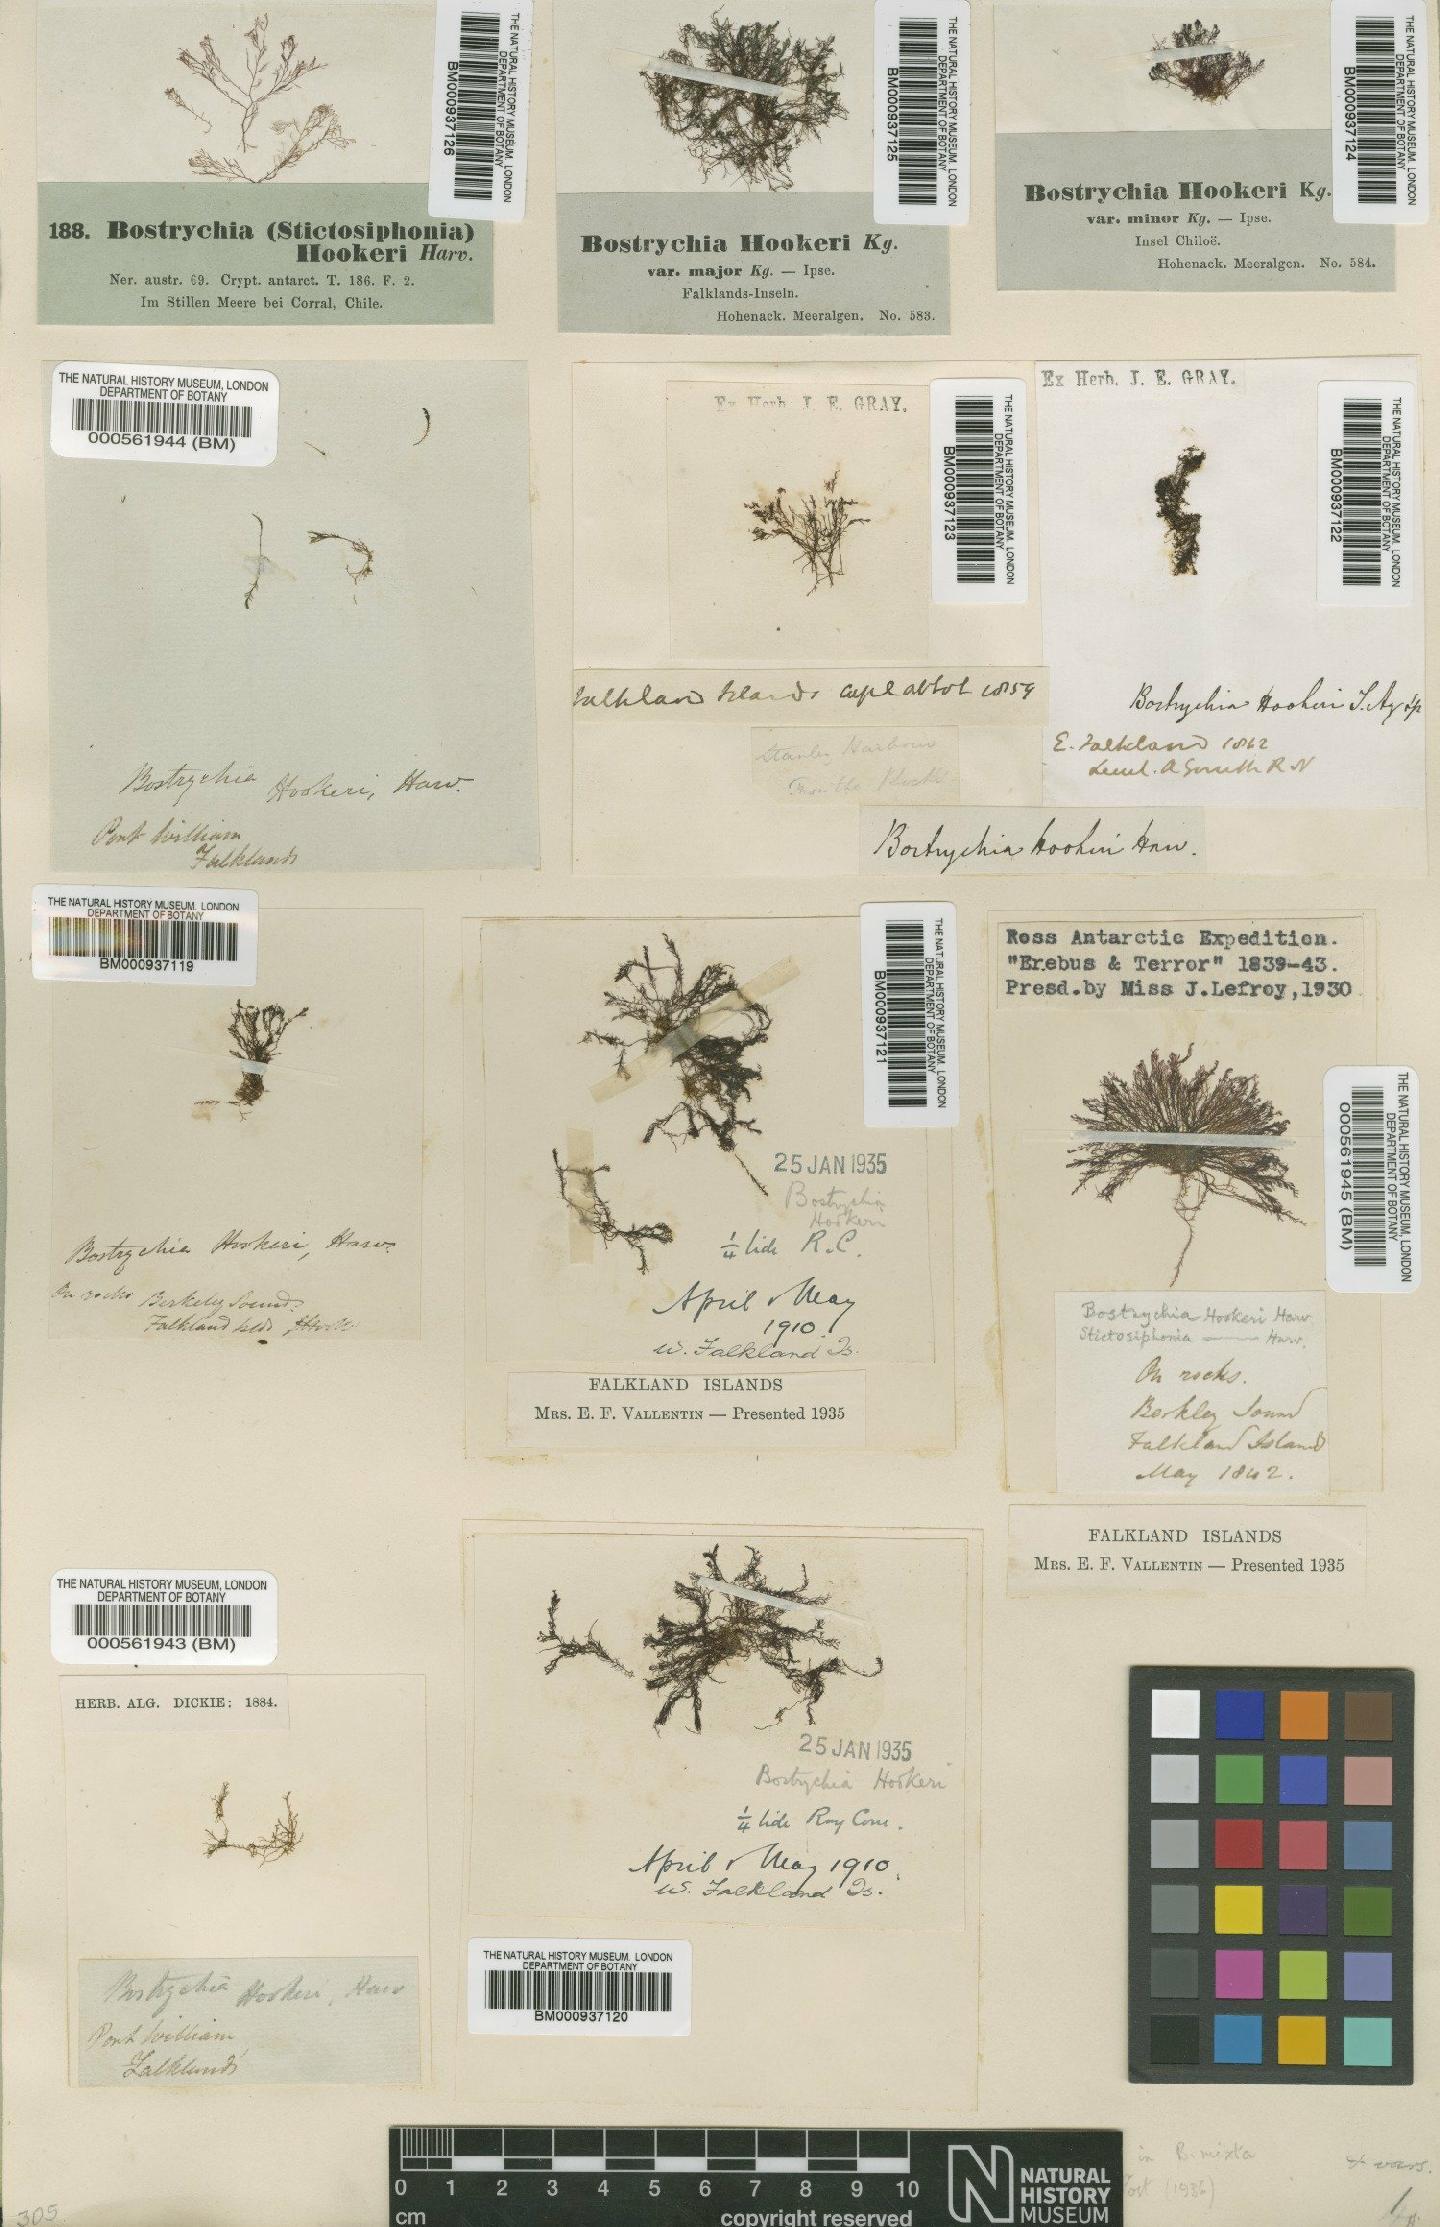 To NHMUK collection (Bostrychia mixta Hook.f. & Harv.; Syntype; NHMUK:ecatalogue:466954)